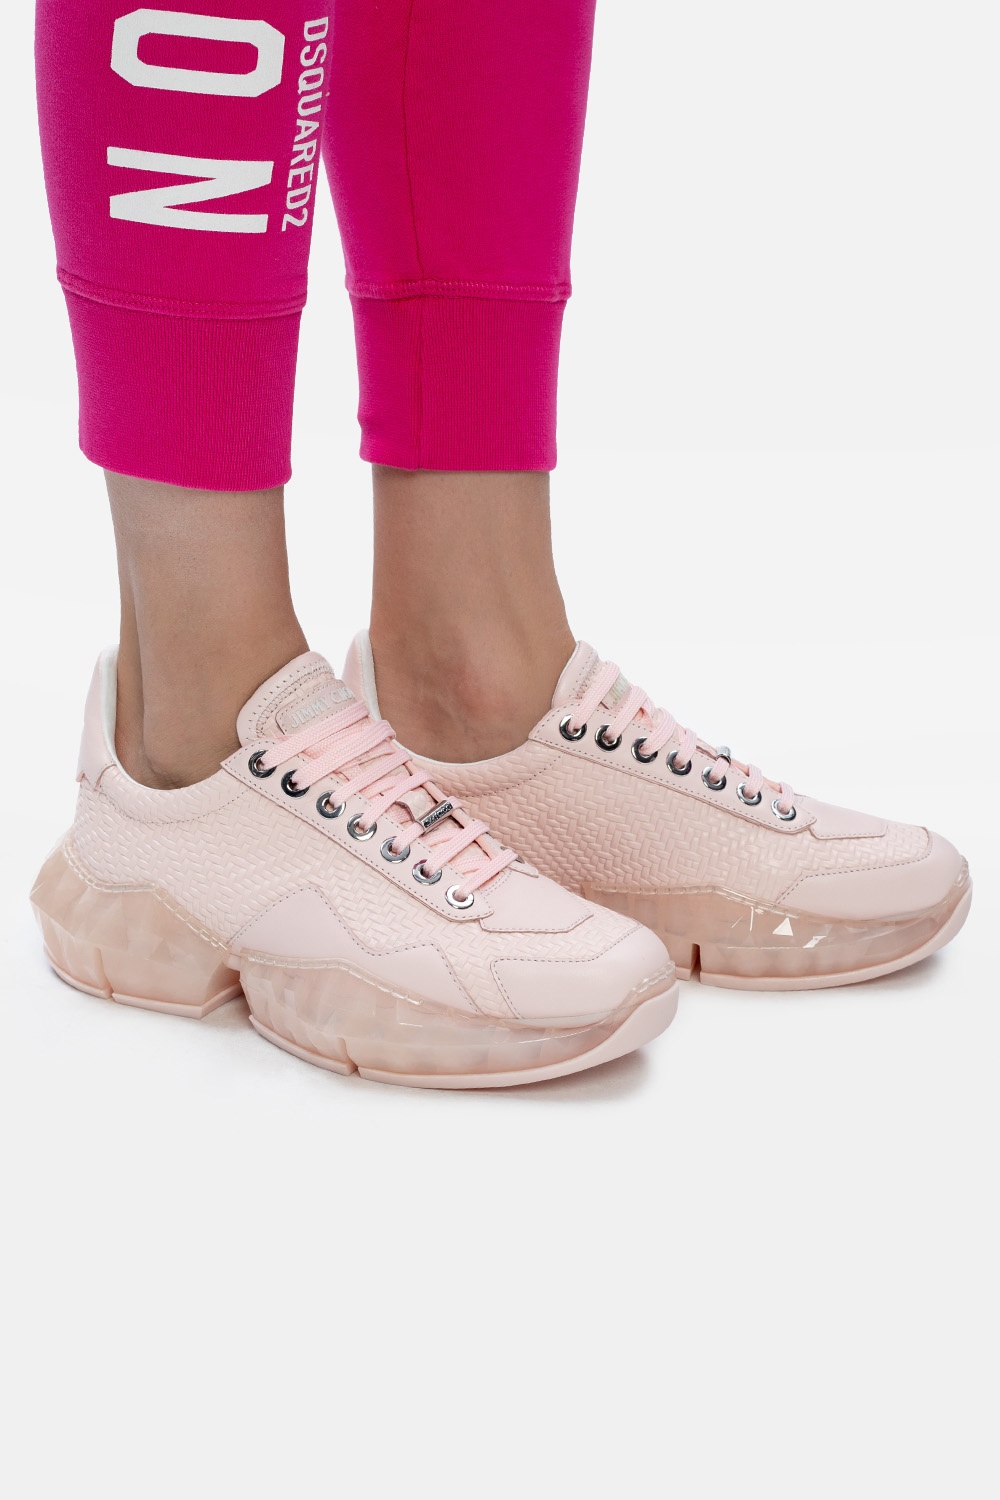 powder pink sneakers